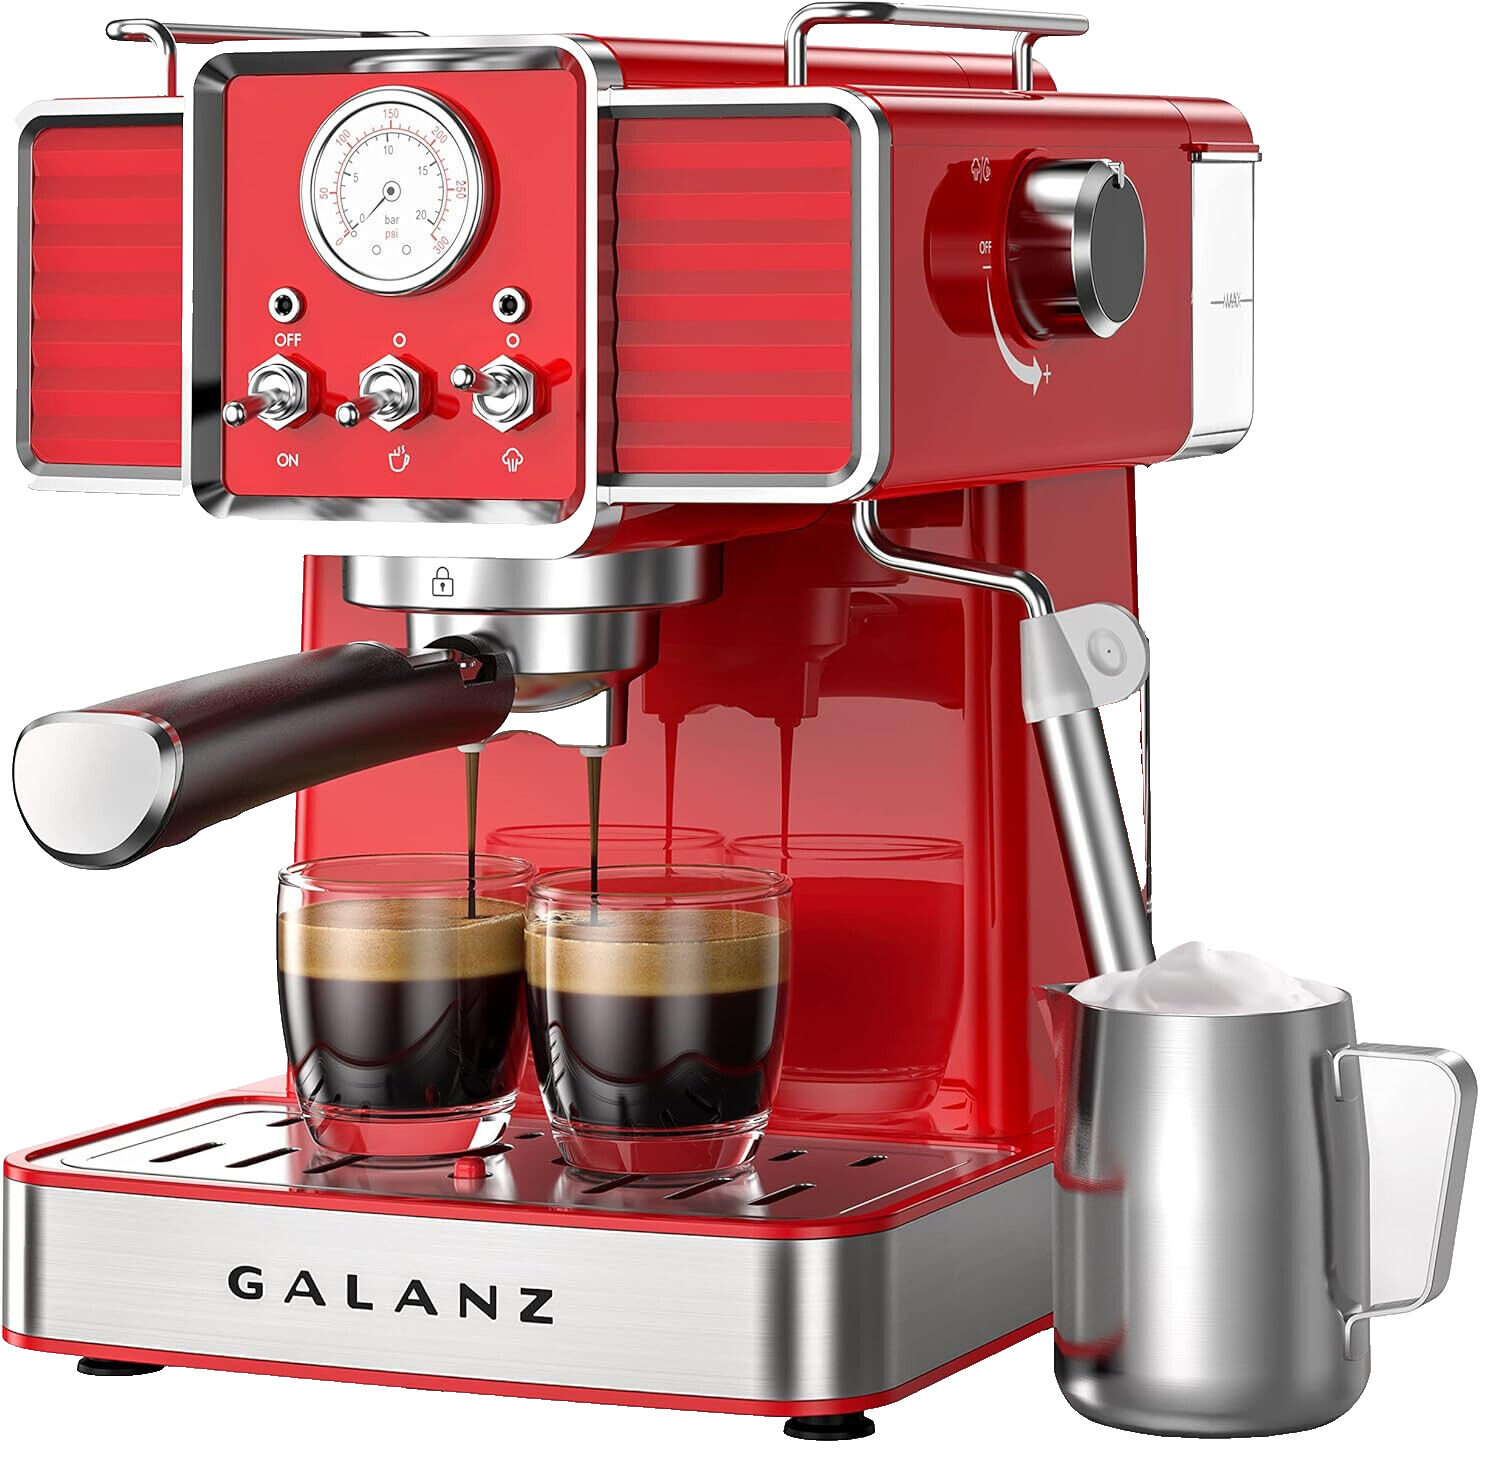 Galanz Retro Espresso Machine with Milk Frother 15 Bar Pump Professional Cappuc